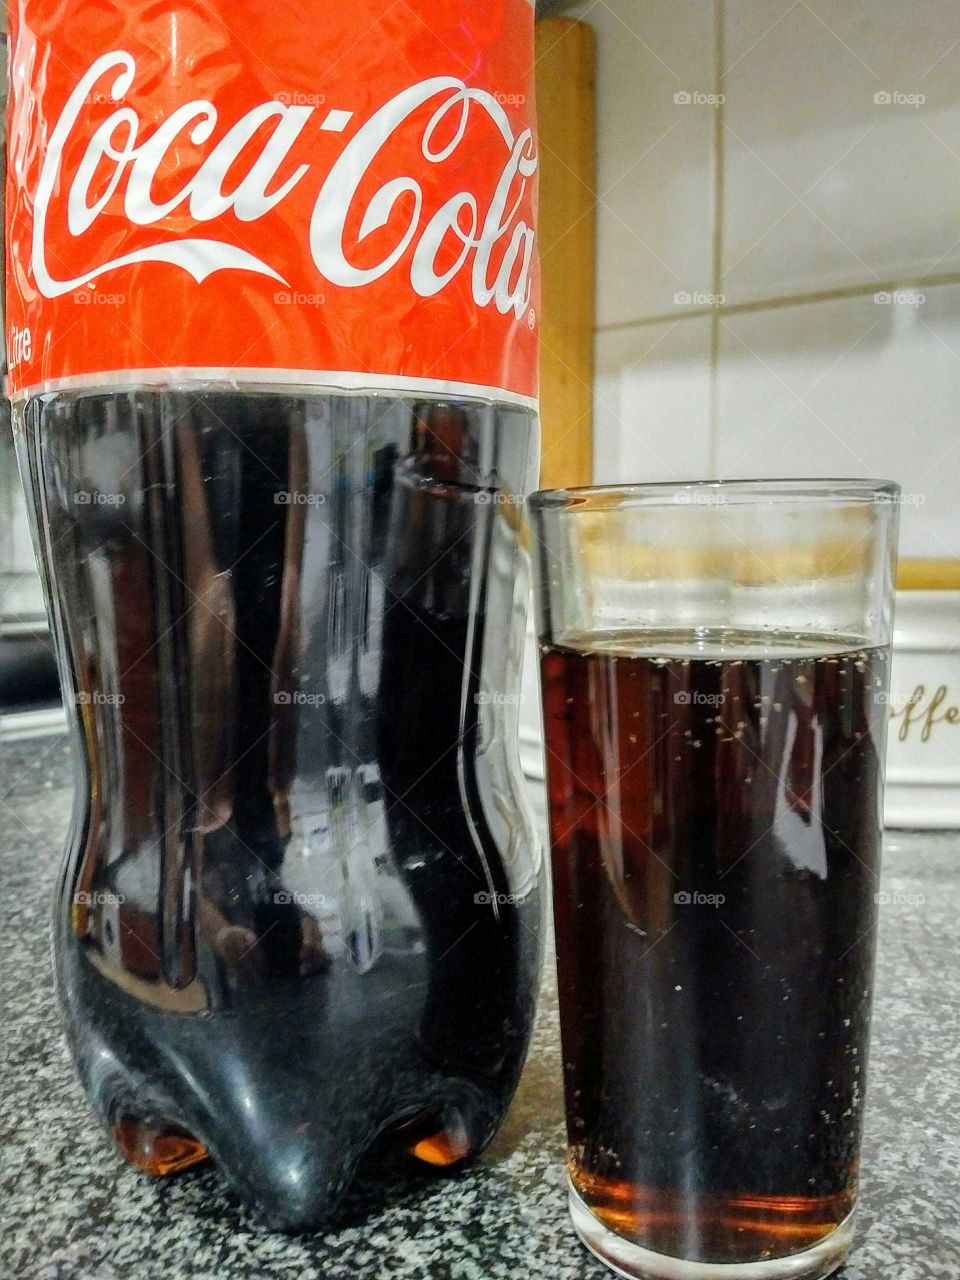 that coca cola feeling